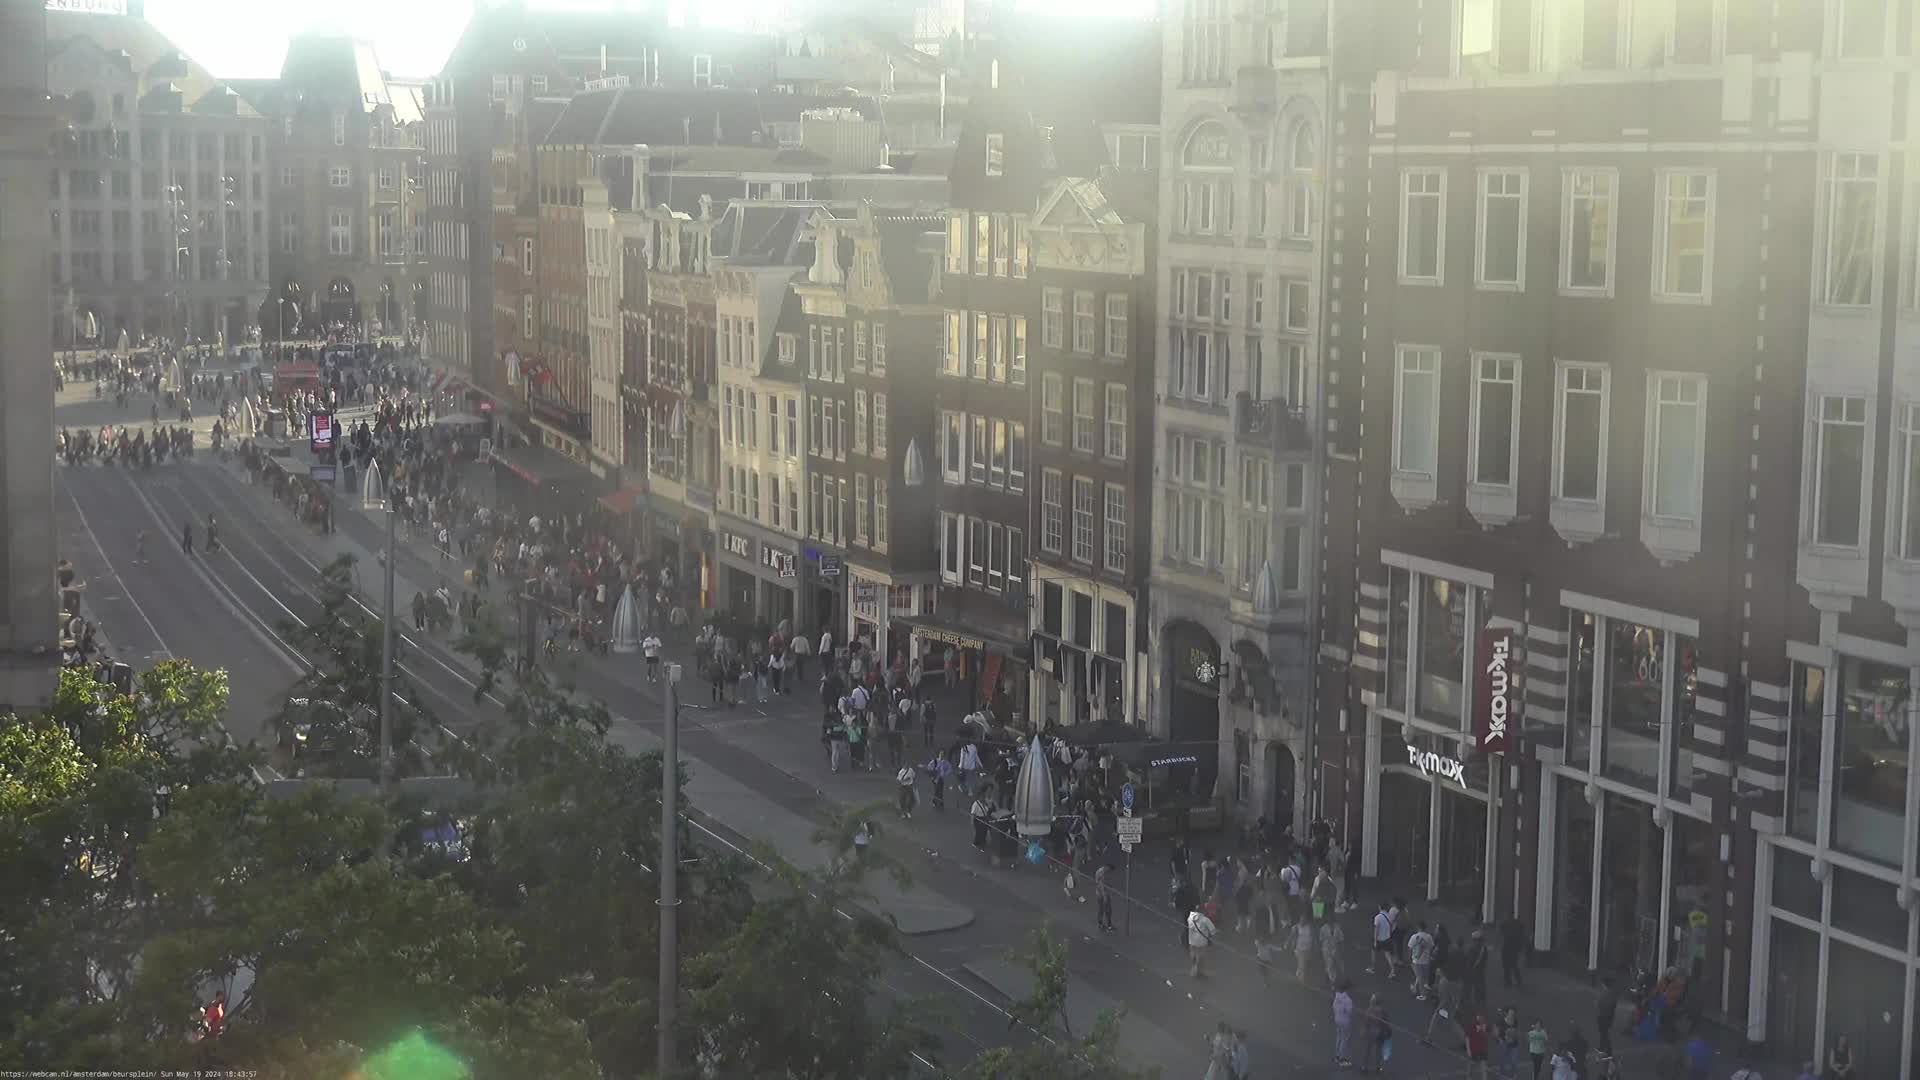 Amsterdam Man. 19:03